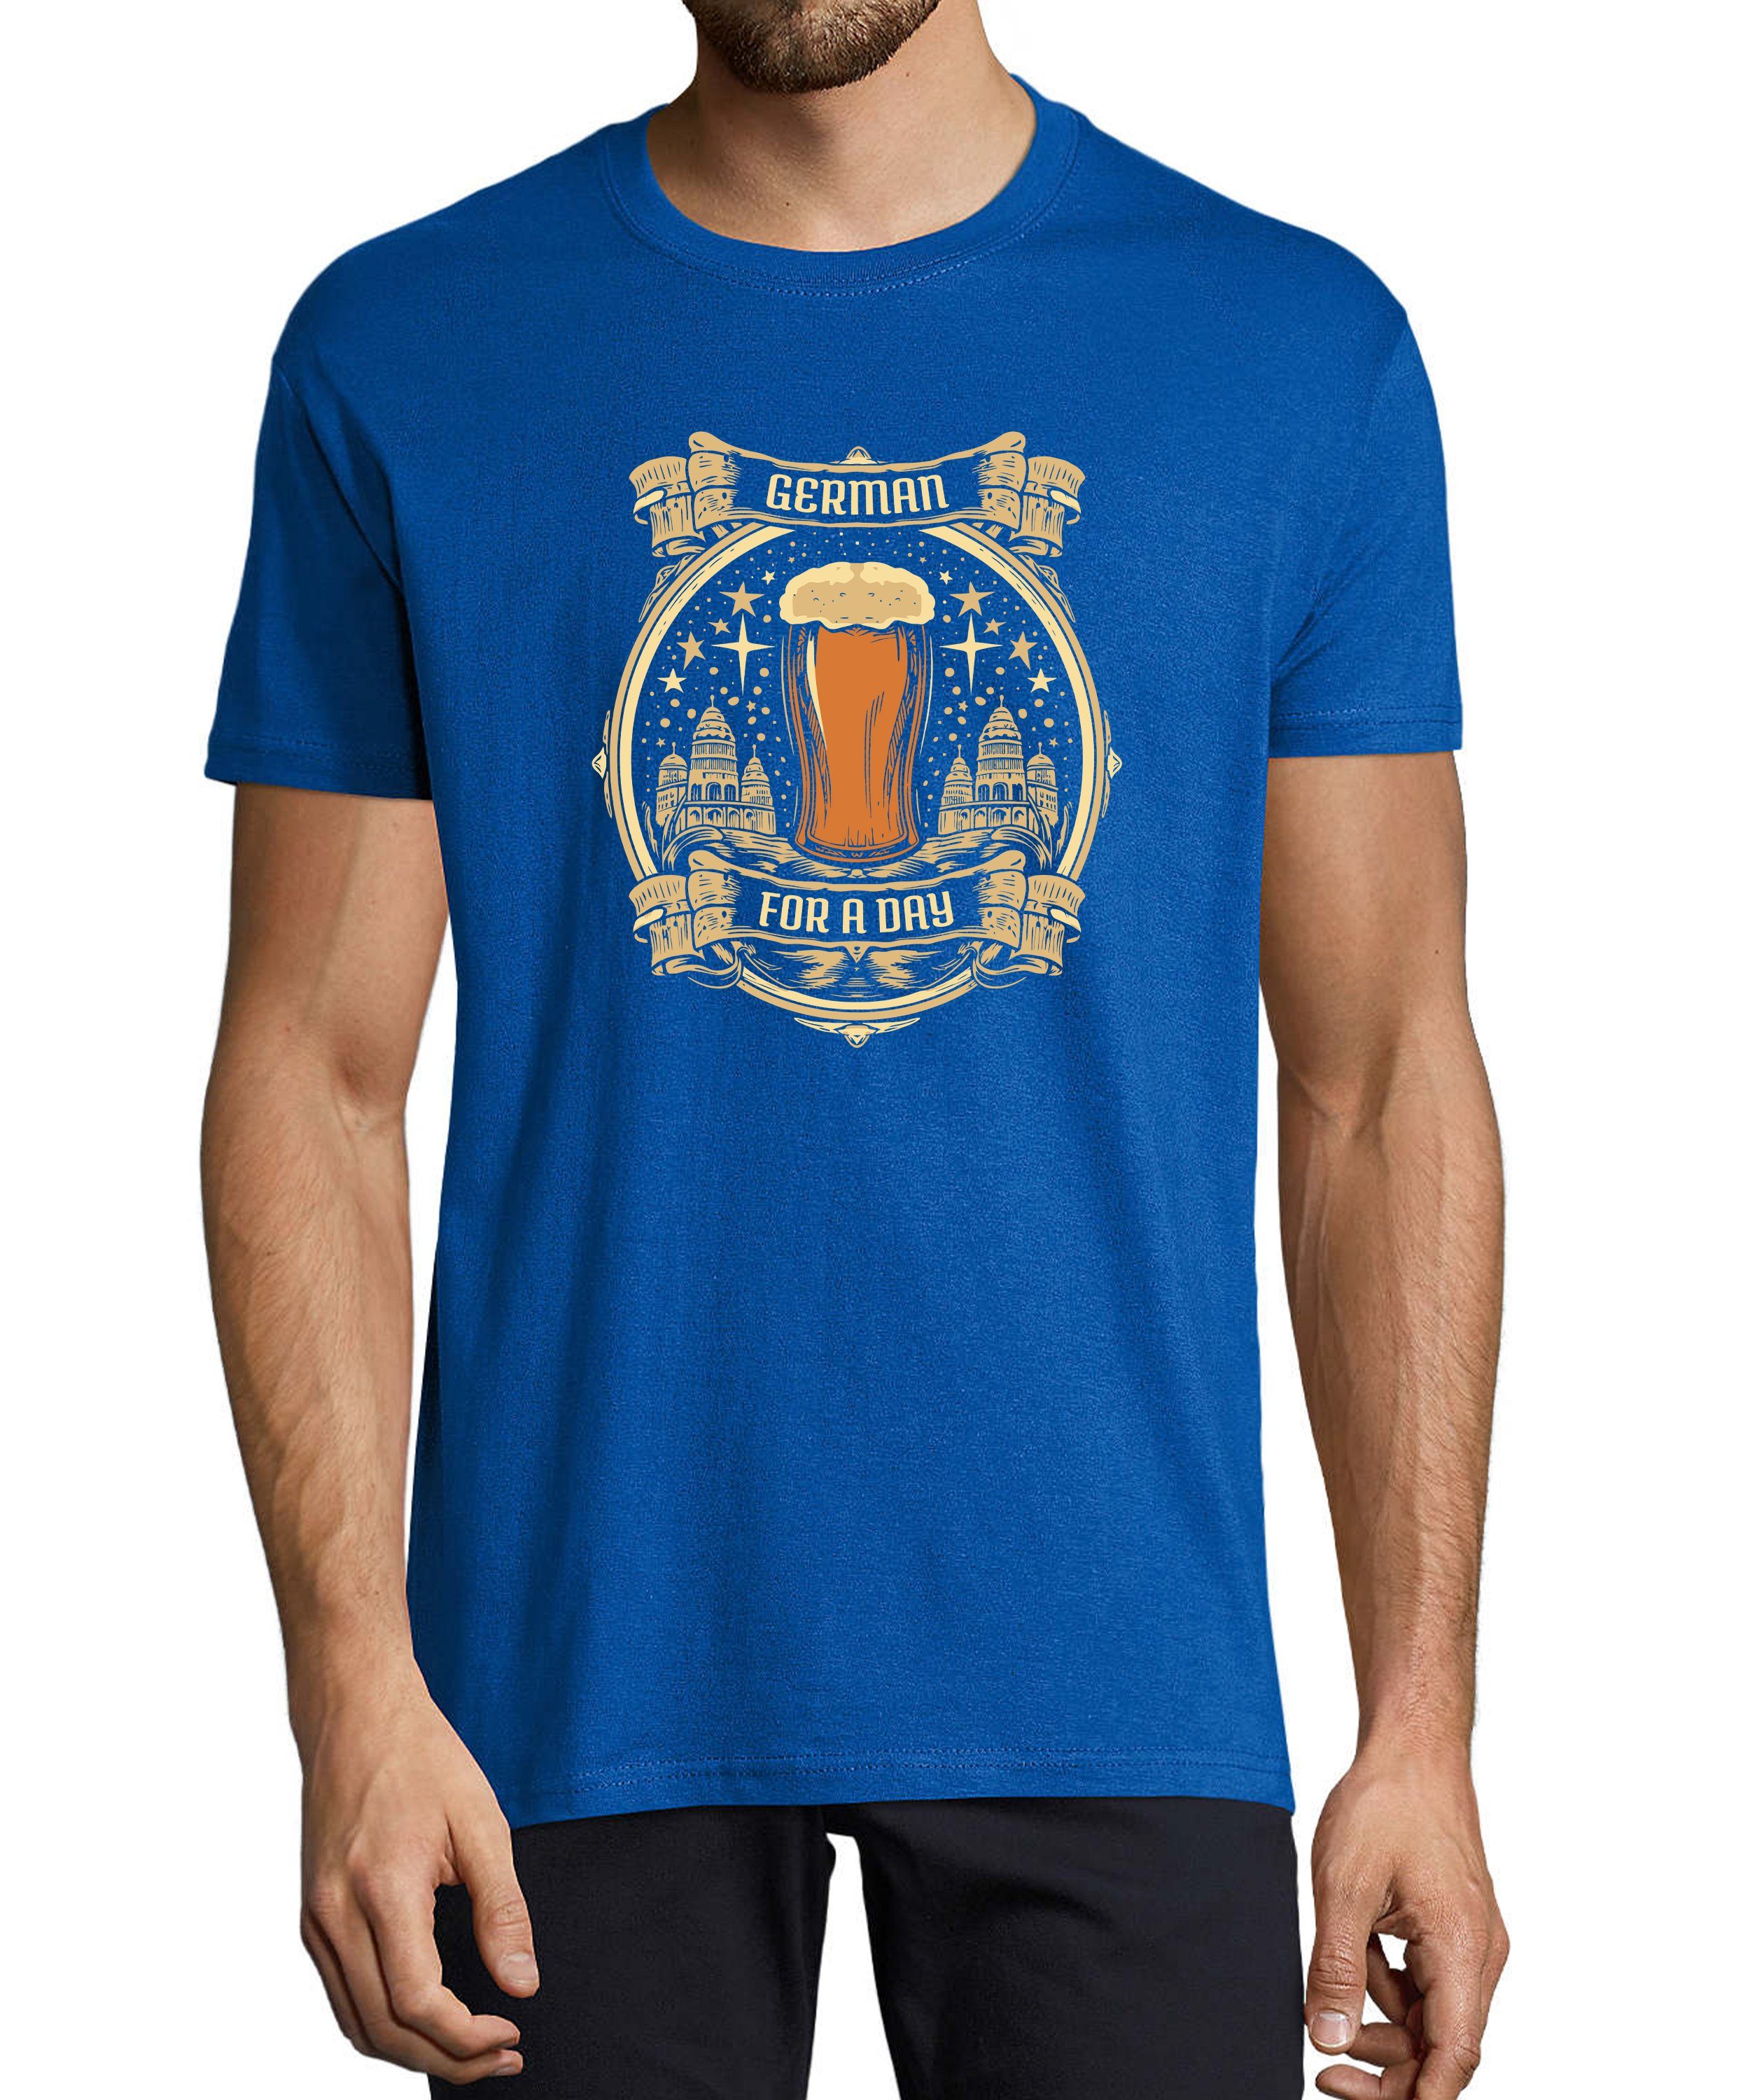 MyDesign24 T-Shirt Herren Fun Print Shirt - Trinkshirt Bierglas mit German for a Day Baumwollshirt mit Aufdruck Regular Fit, i314 royal blau